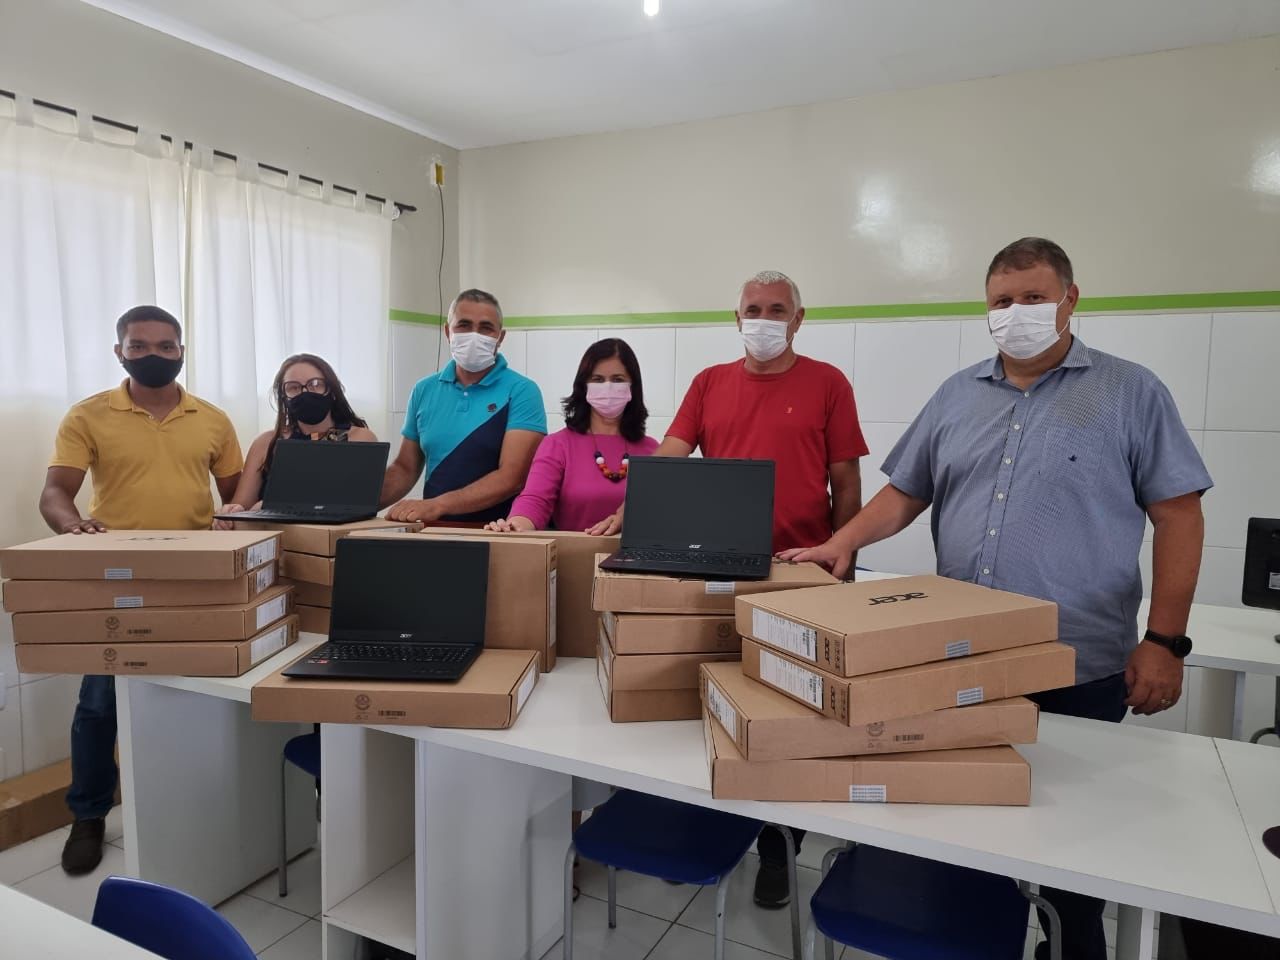 WhatsApp Image 2022 02 16 at 18.16.34 - Prefeito de Boa Vista entrega novos equipamentos para laboratório de informática